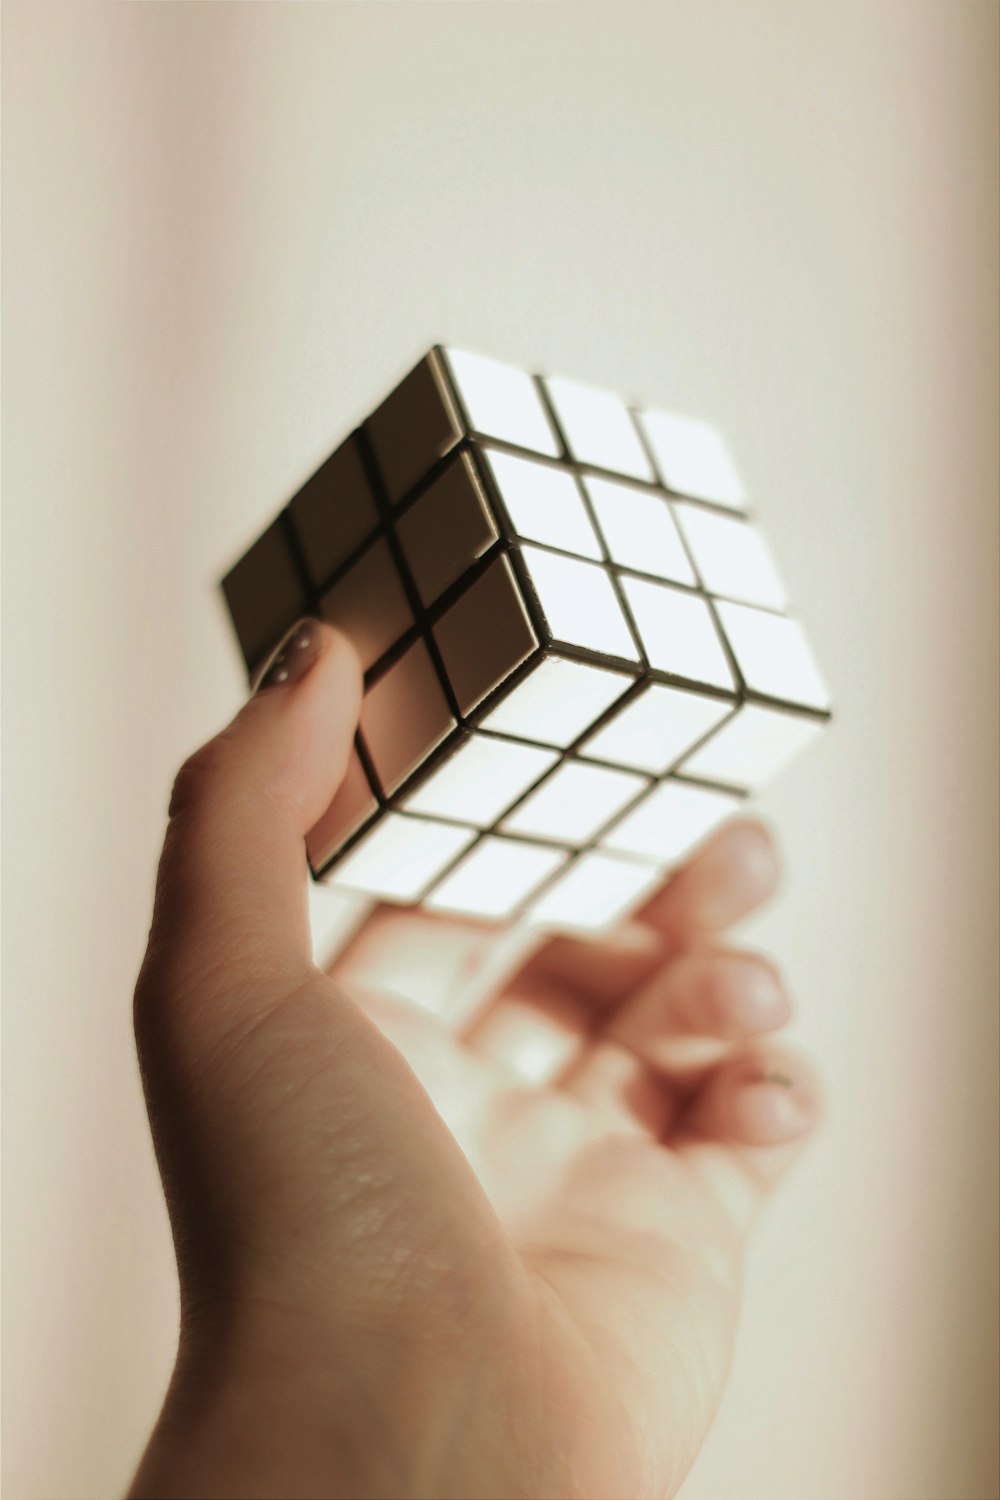 Person, die 3 x 3 Rubiks Würfel hält